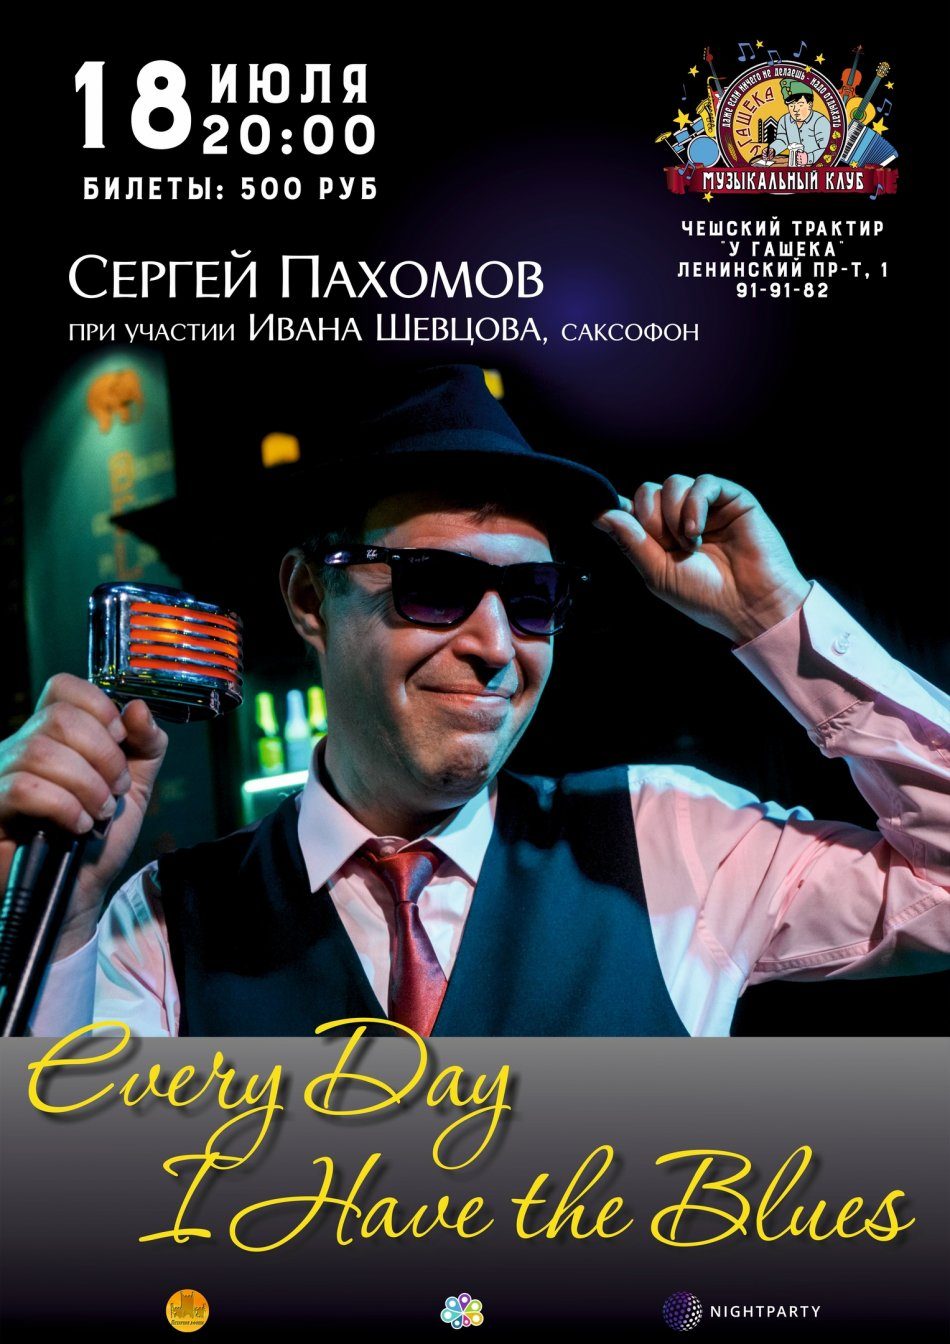 Сергей Пахомов — «Every Day I Have the Blues»